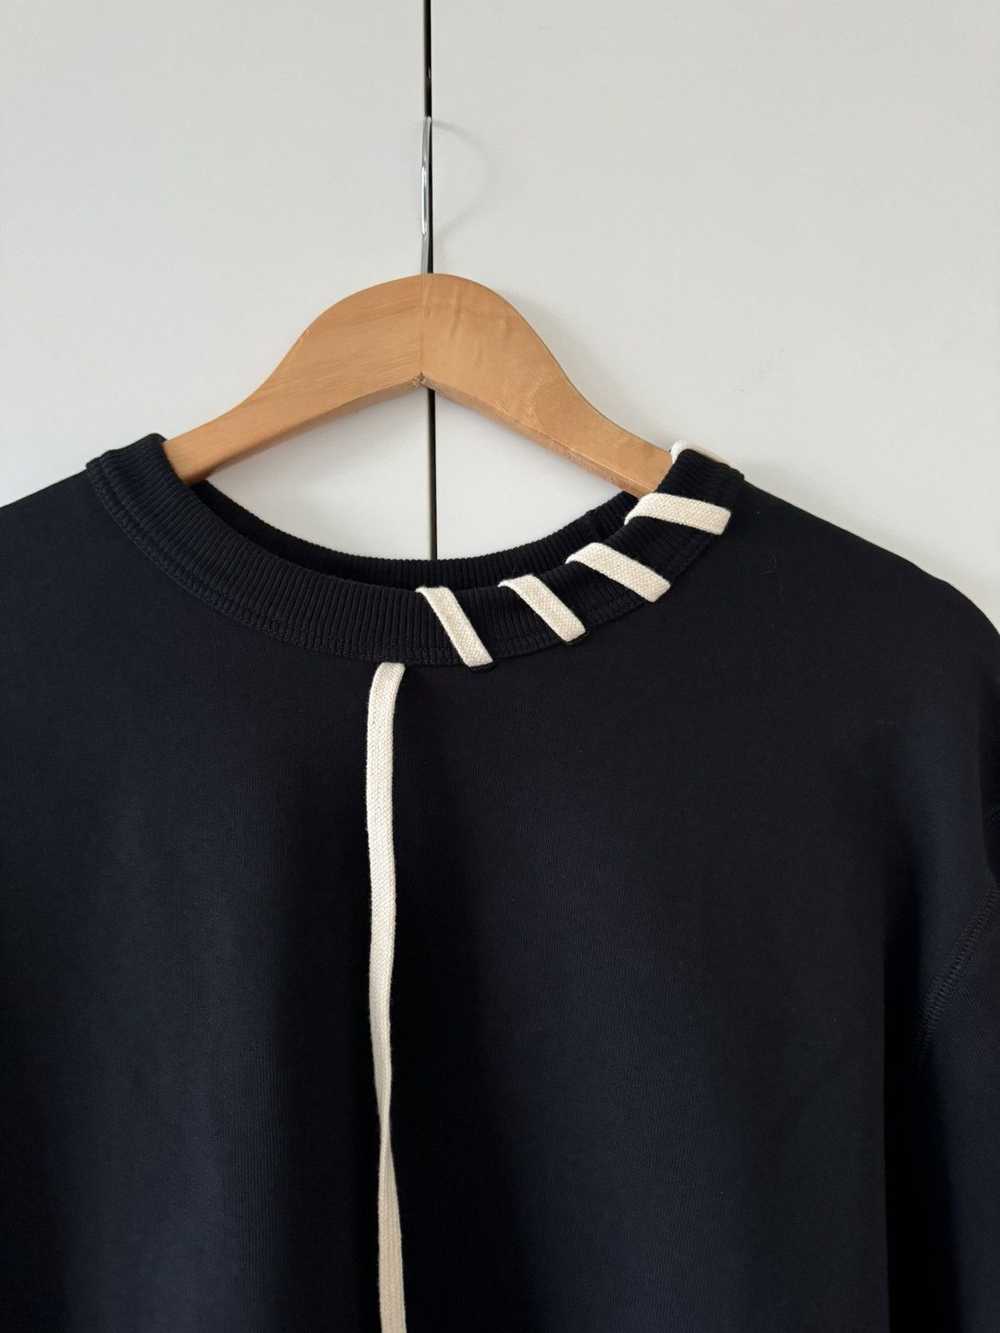 Craig Green Black Laced Sweatshirt FW21 XL - image 2